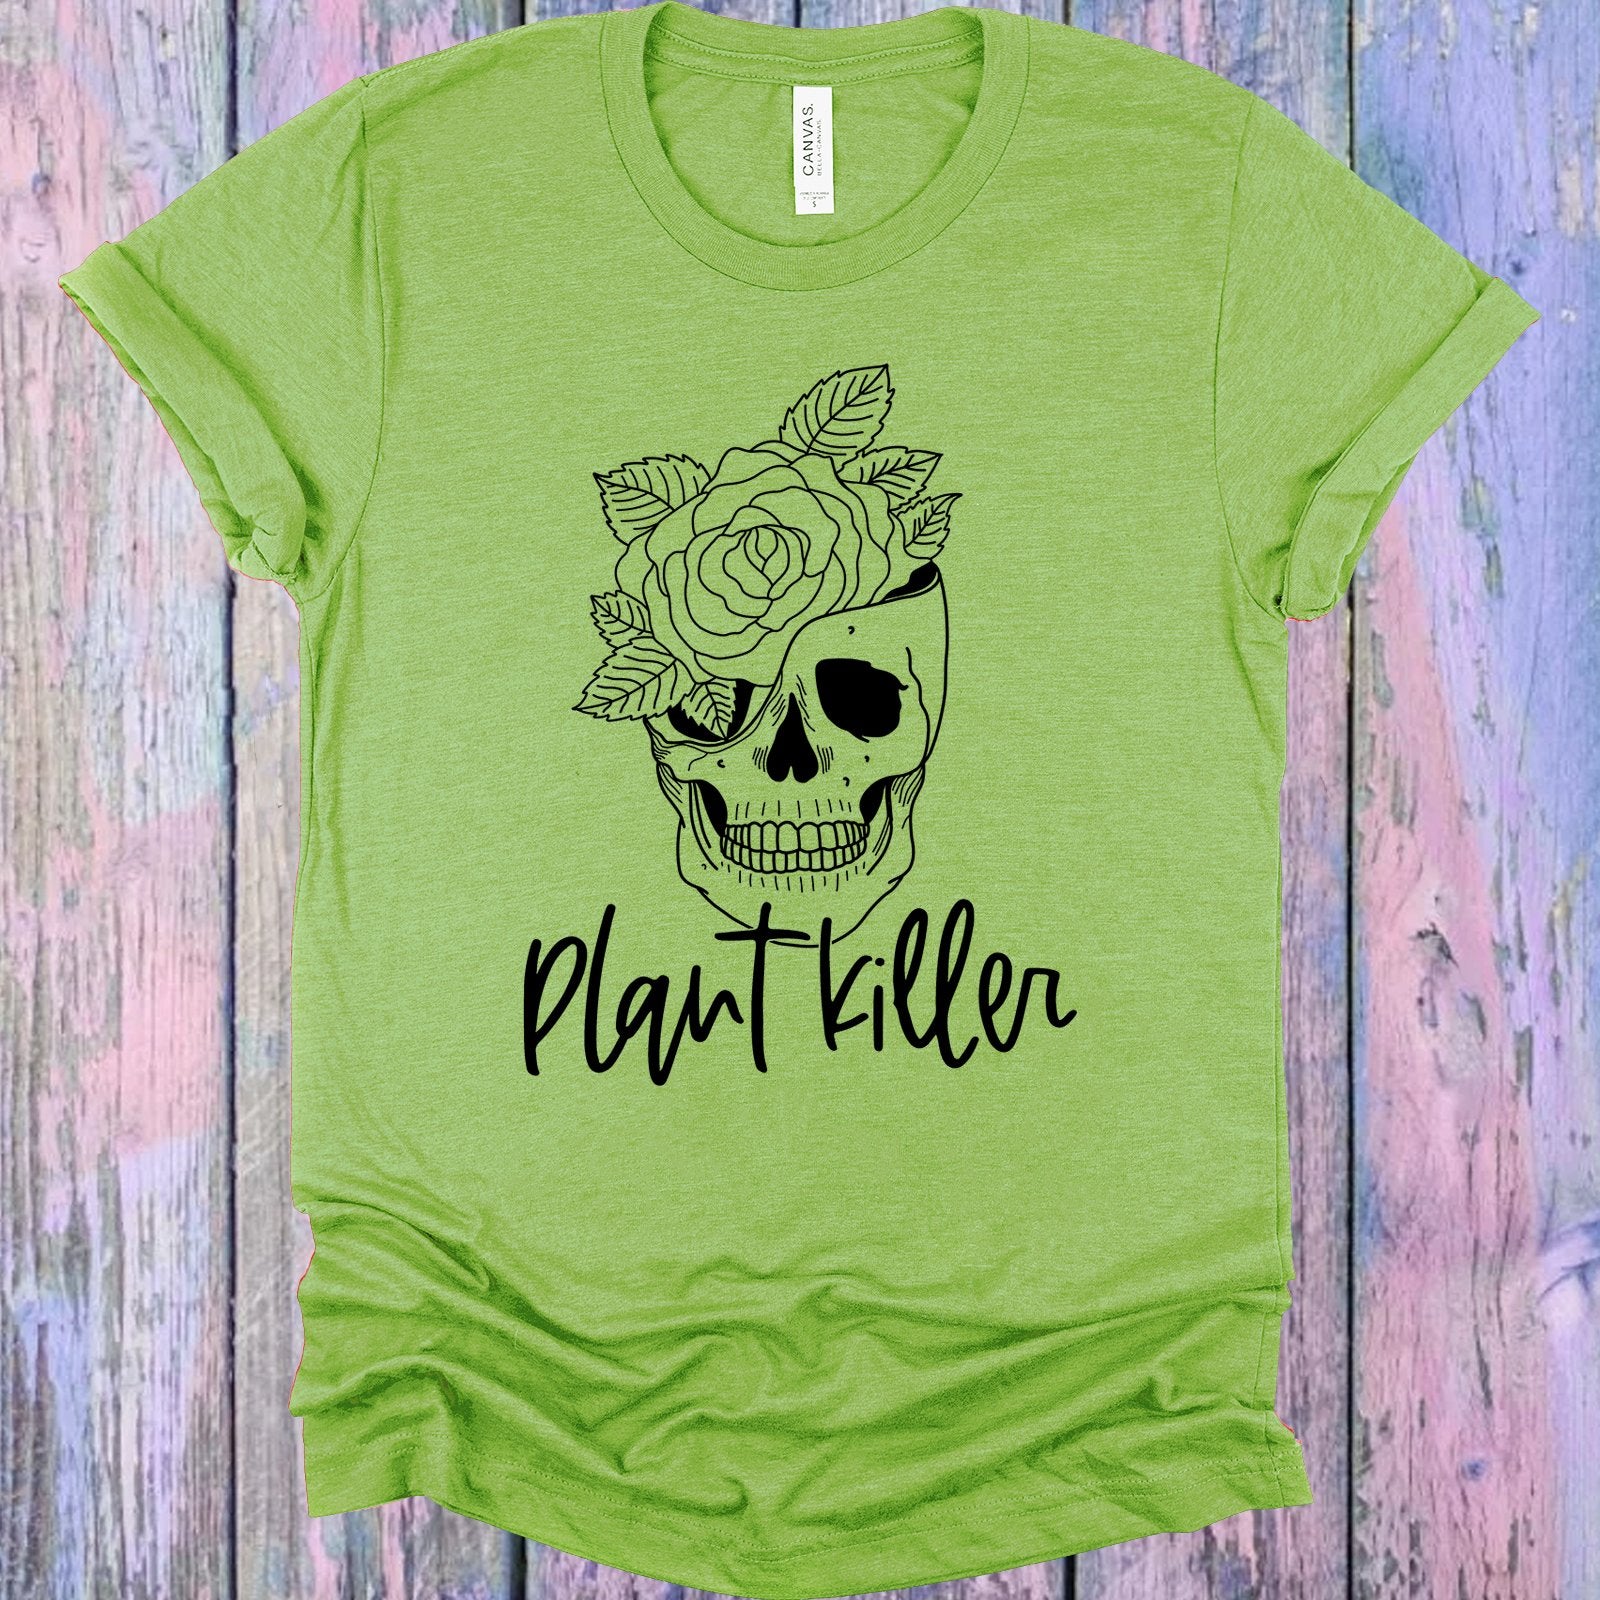 Plant Killer Graphic Tee Graphic Tee